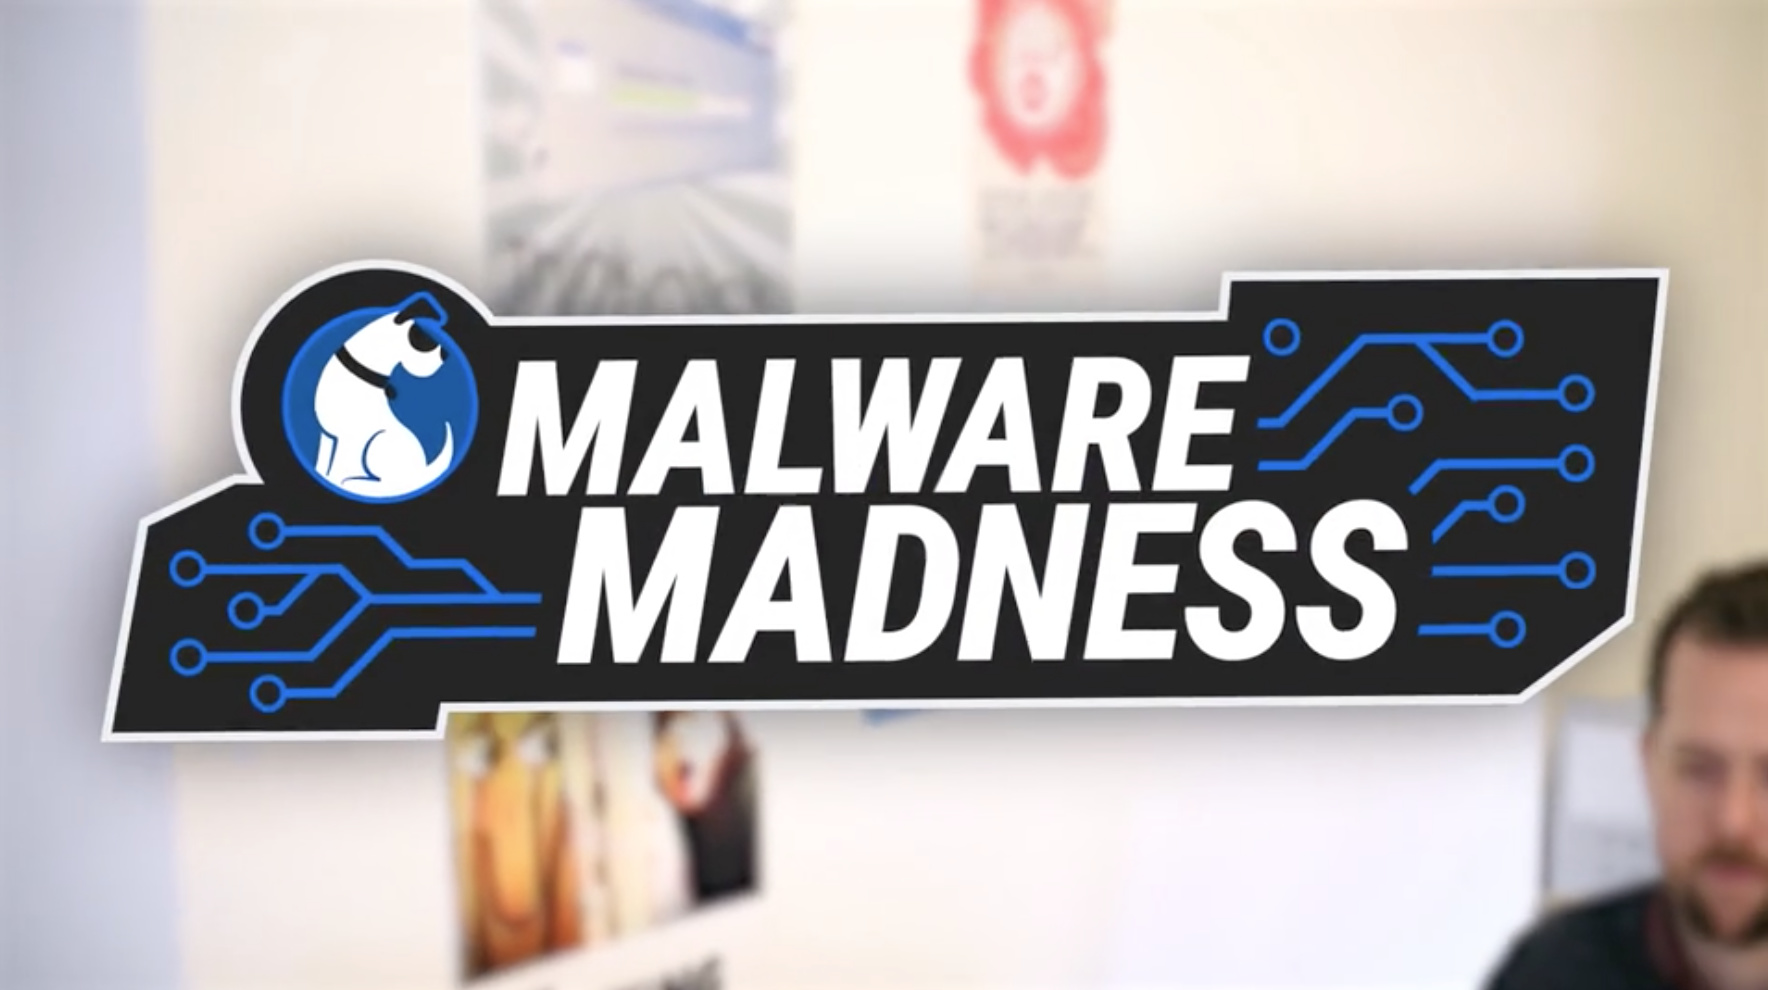 malware-march-madness